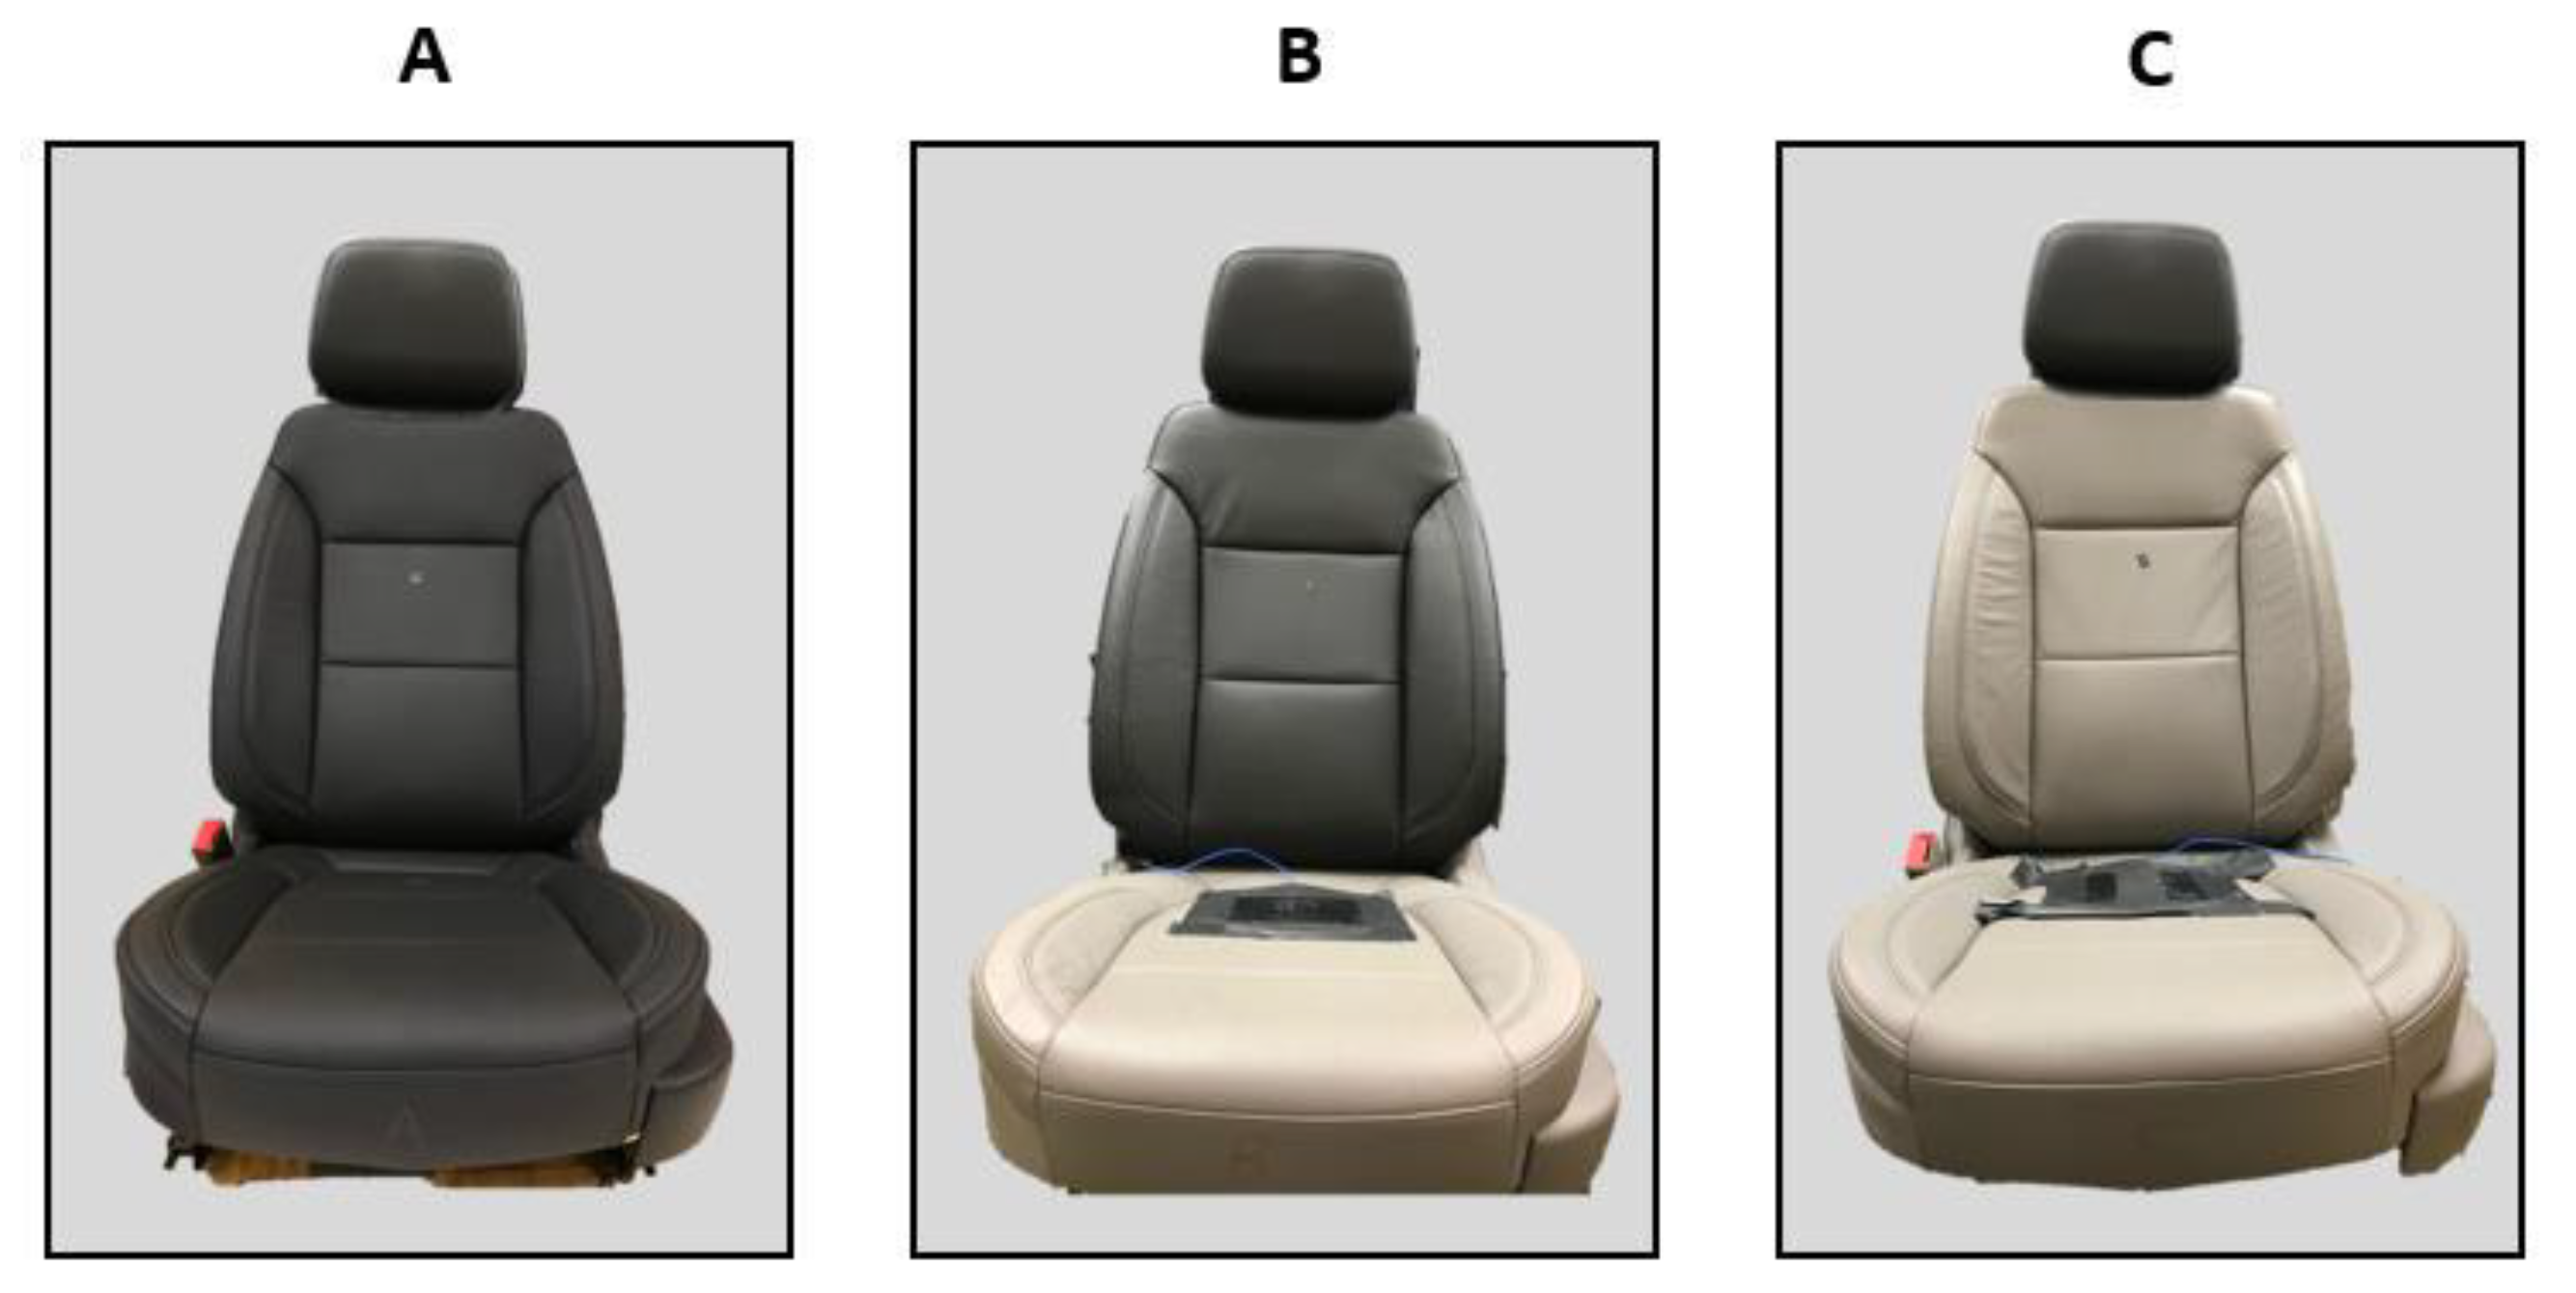 ZHOOGE Car Seat Cushion, Car Seat Pad for Sciatica Tailbone Pain Relief, Memory Foam Driver Seat Cushion to Improve Driving View, Seat Cushion